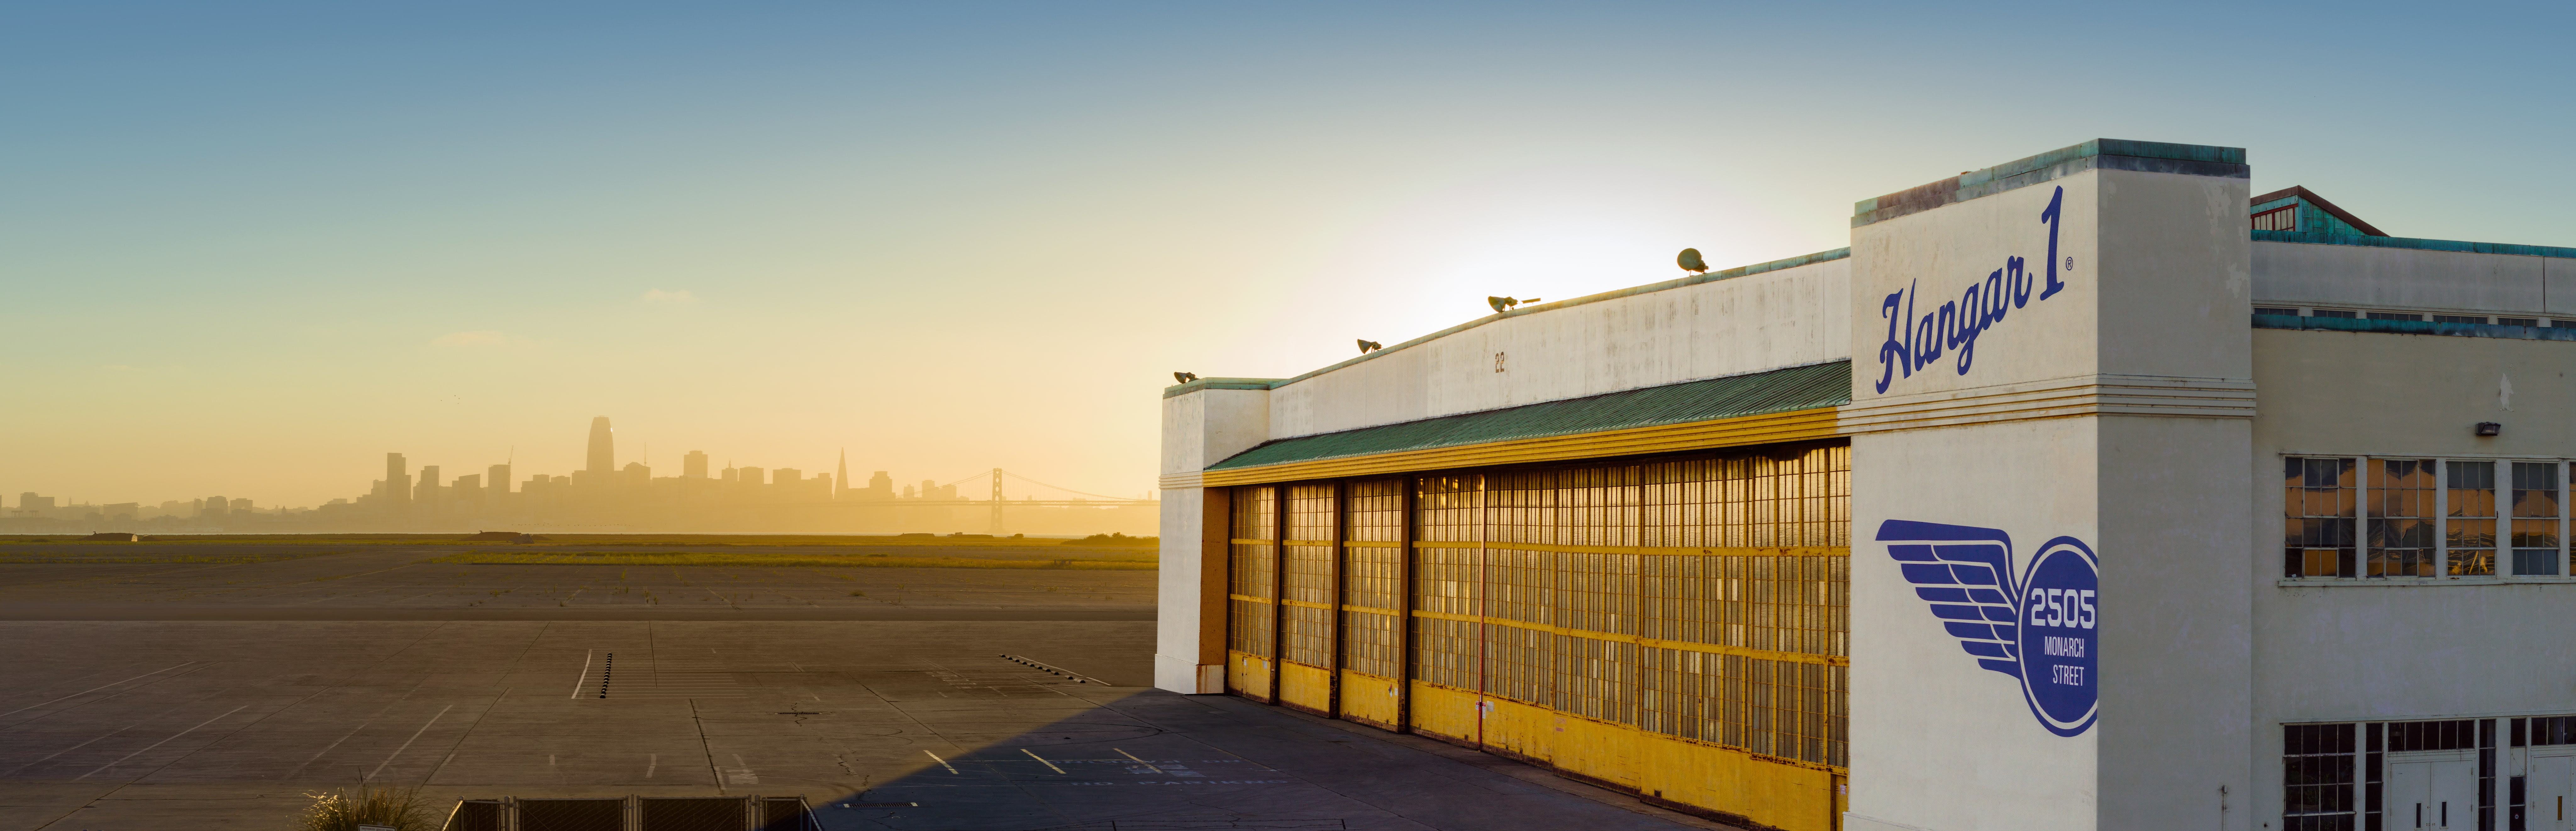 Featured Venue: Hangar 1 Vodka - Alameda, California